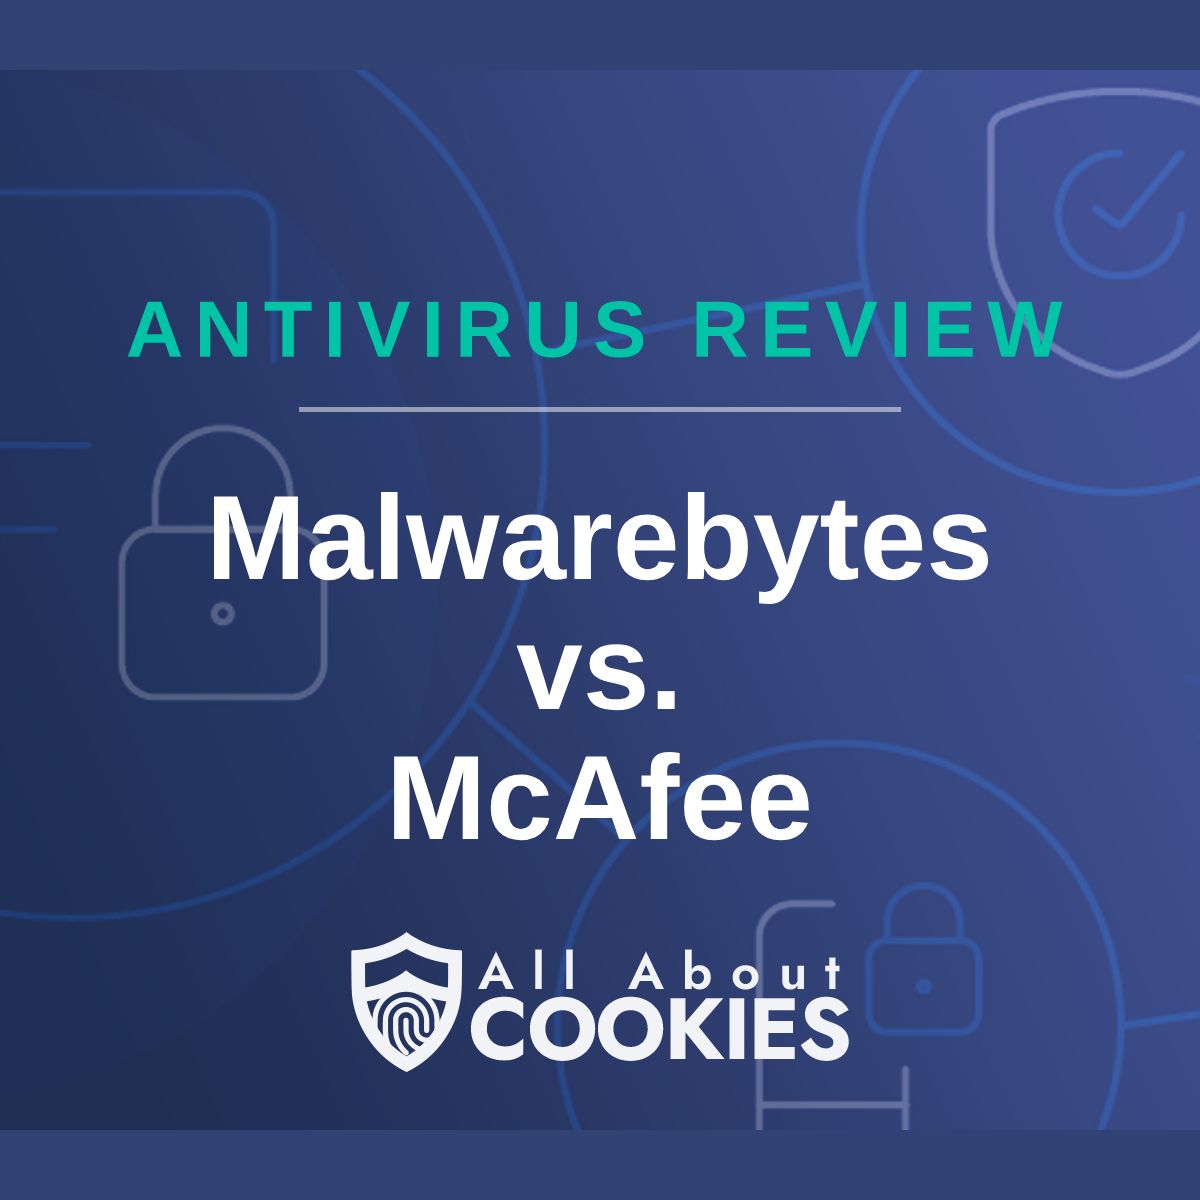 Malwarebytes vs. McAfee comparison